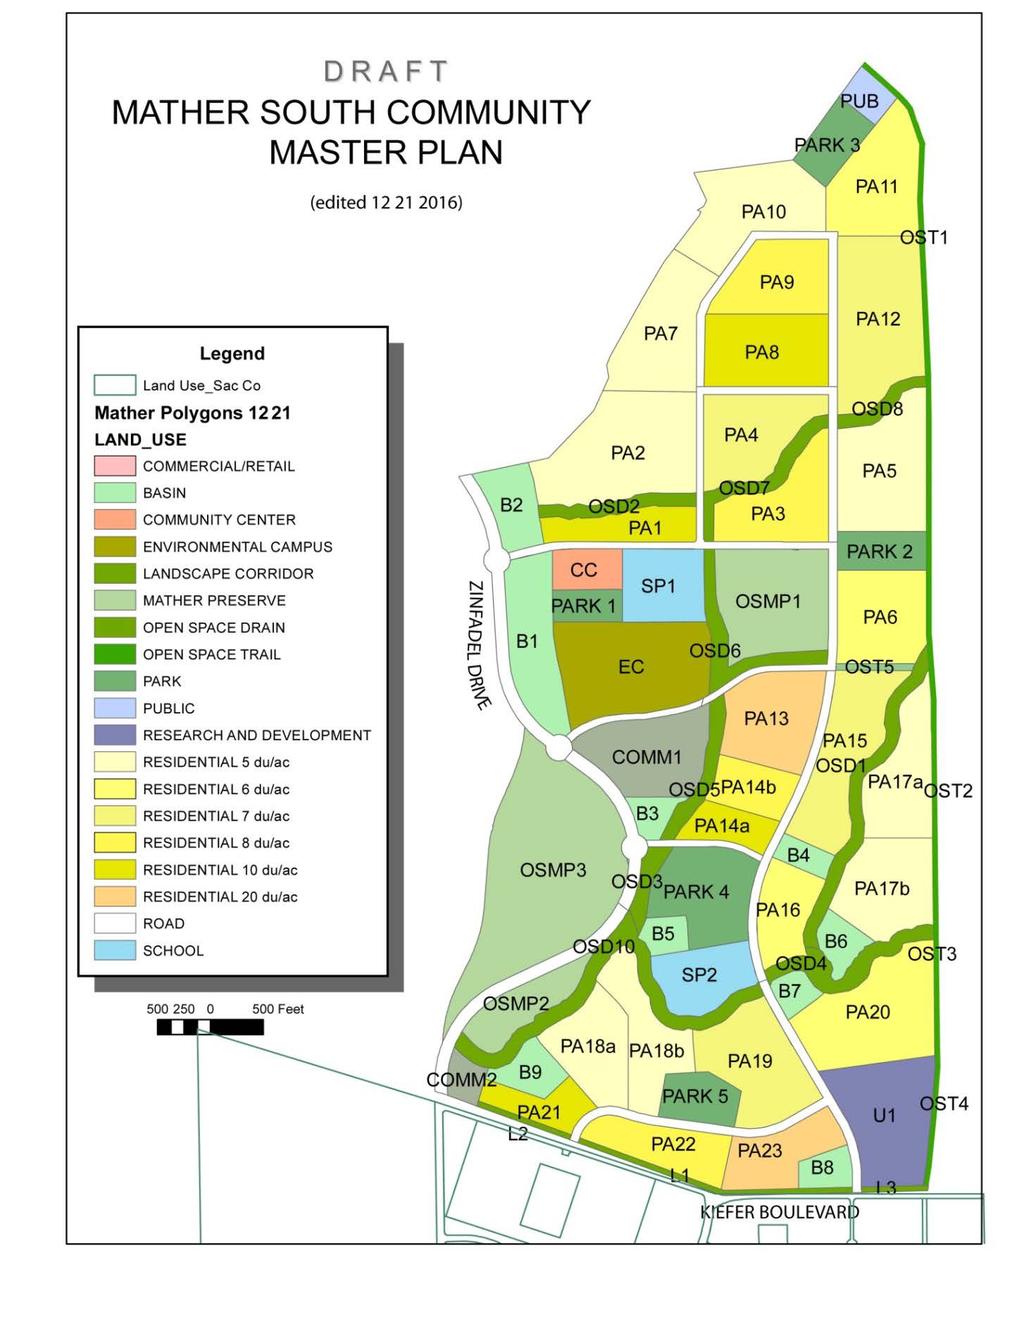 Plate NOP-5: Proposed Land Use Plan